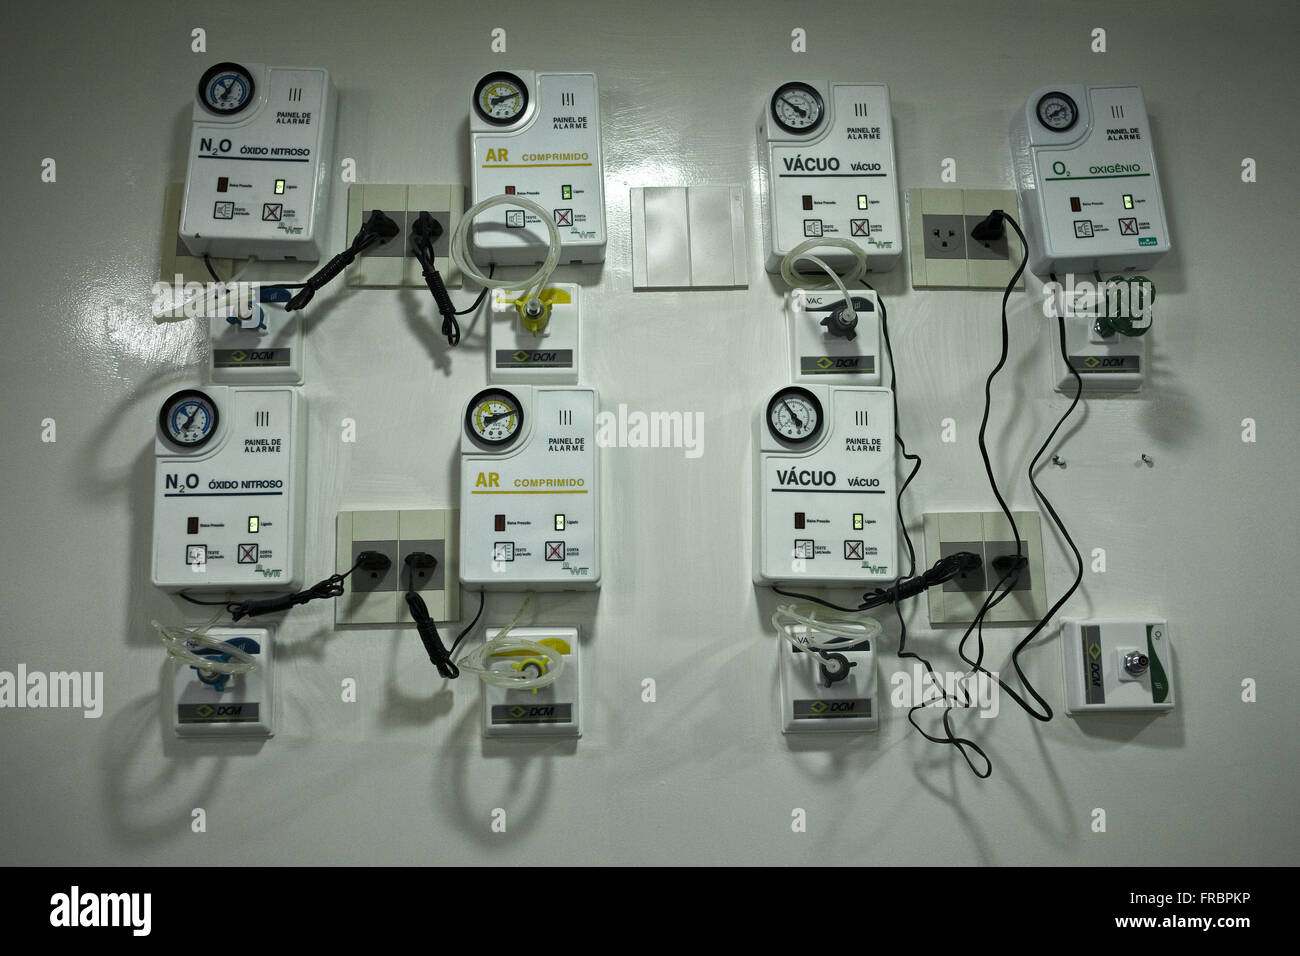 Alarm-Panel - Monitore verrohrt medizinische Gasnetze Stockfoto